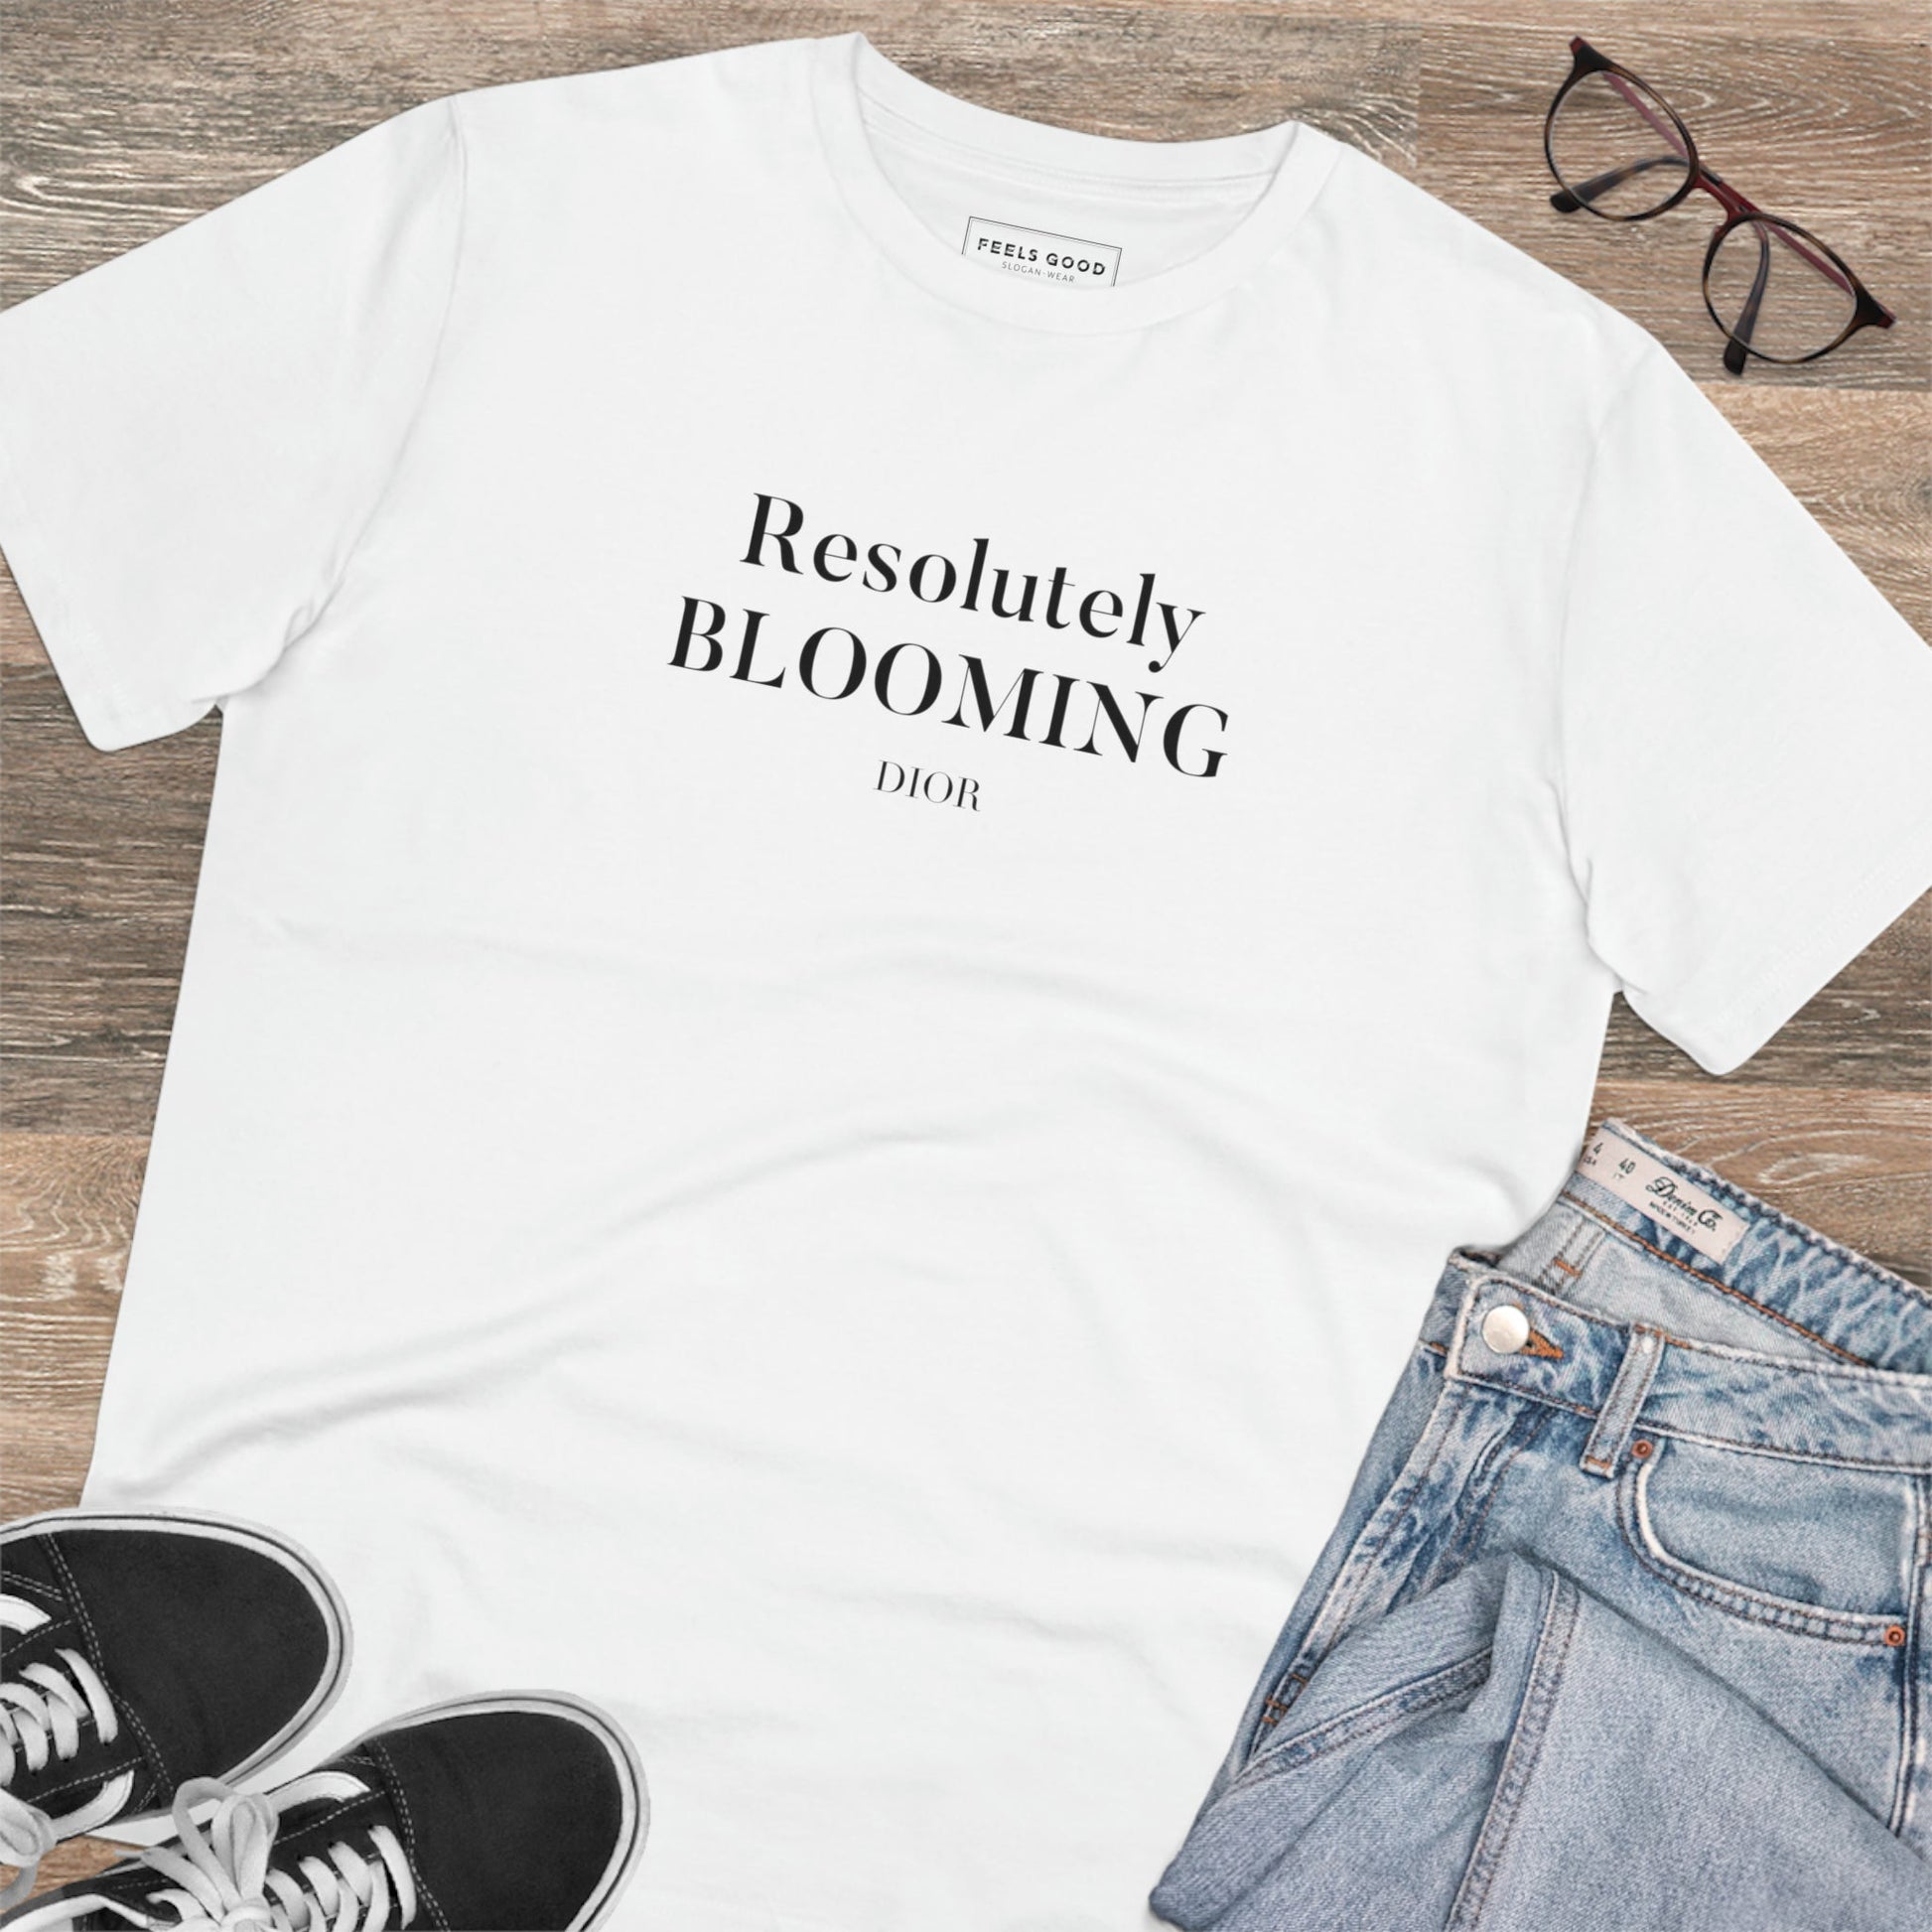 Inspirational Quote 'Blooming' Dior Organic Cotton T-shirt - Dior Tshirt